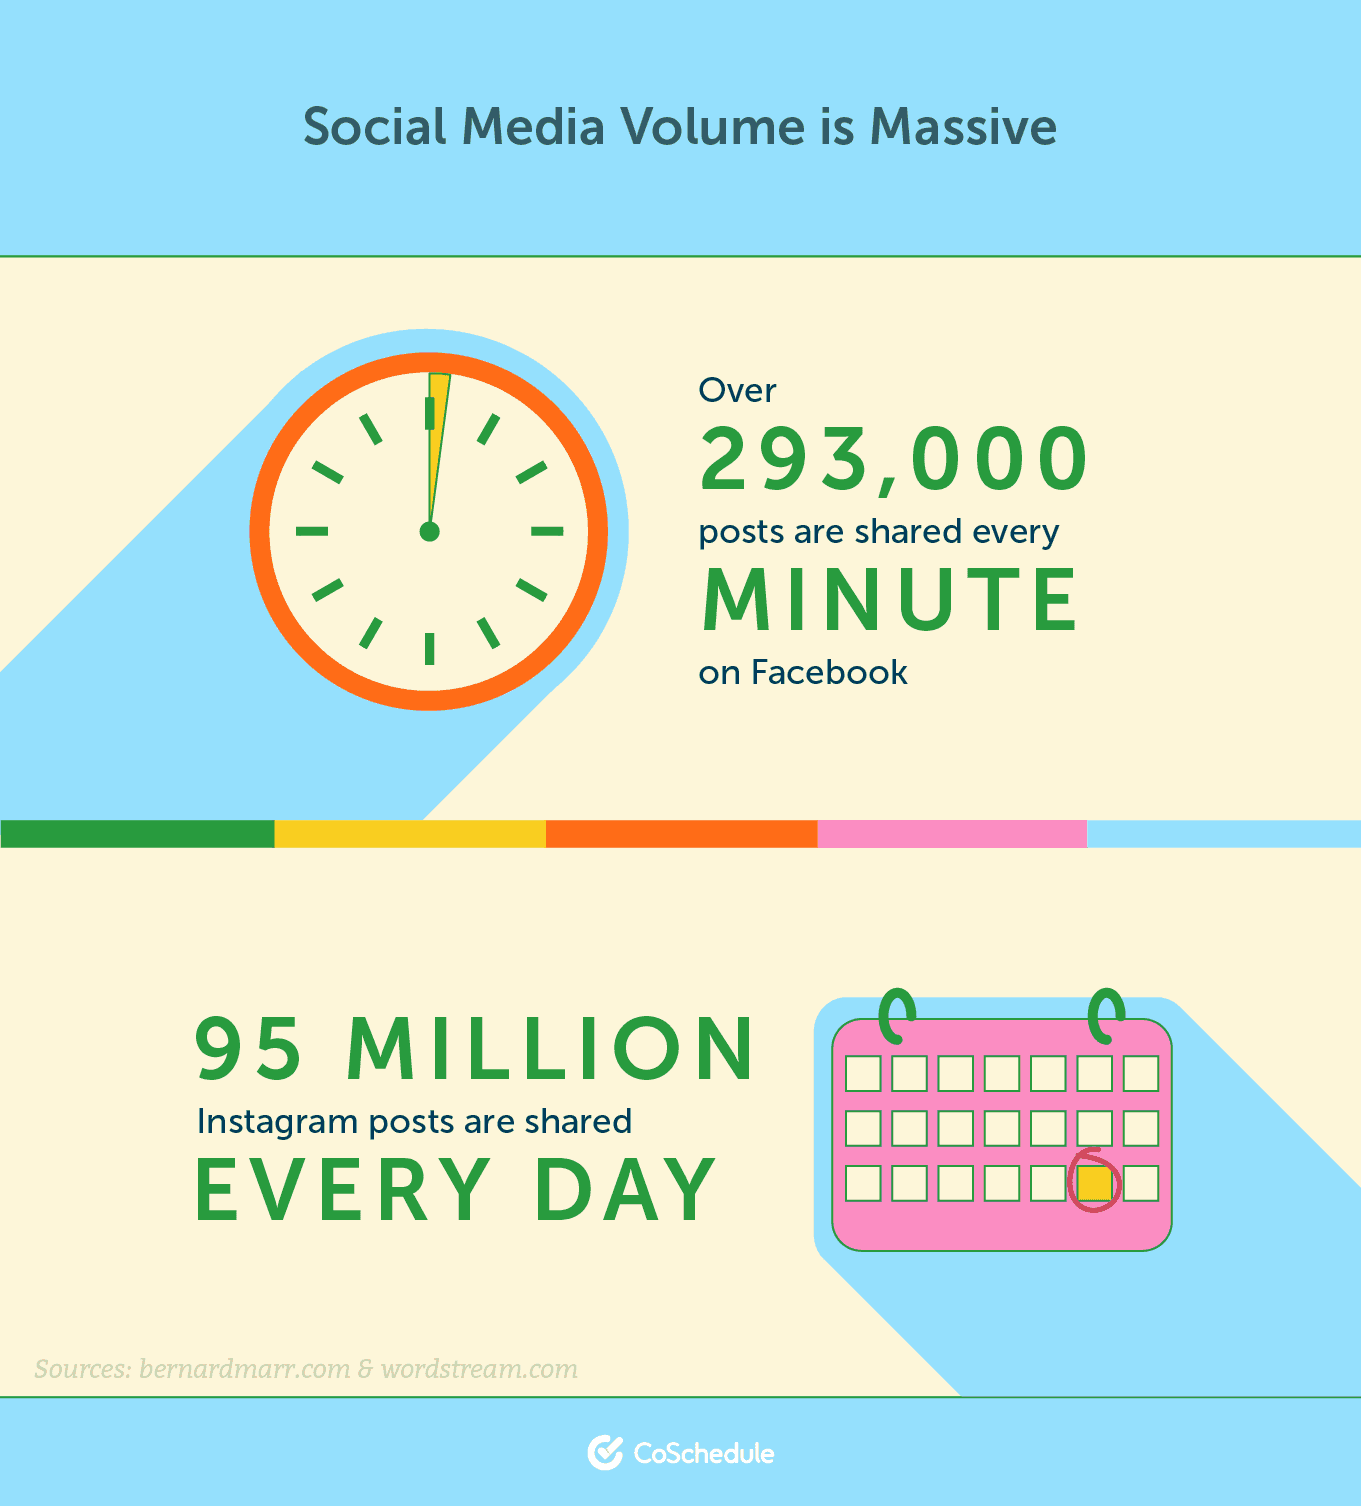 Social media volume is massive